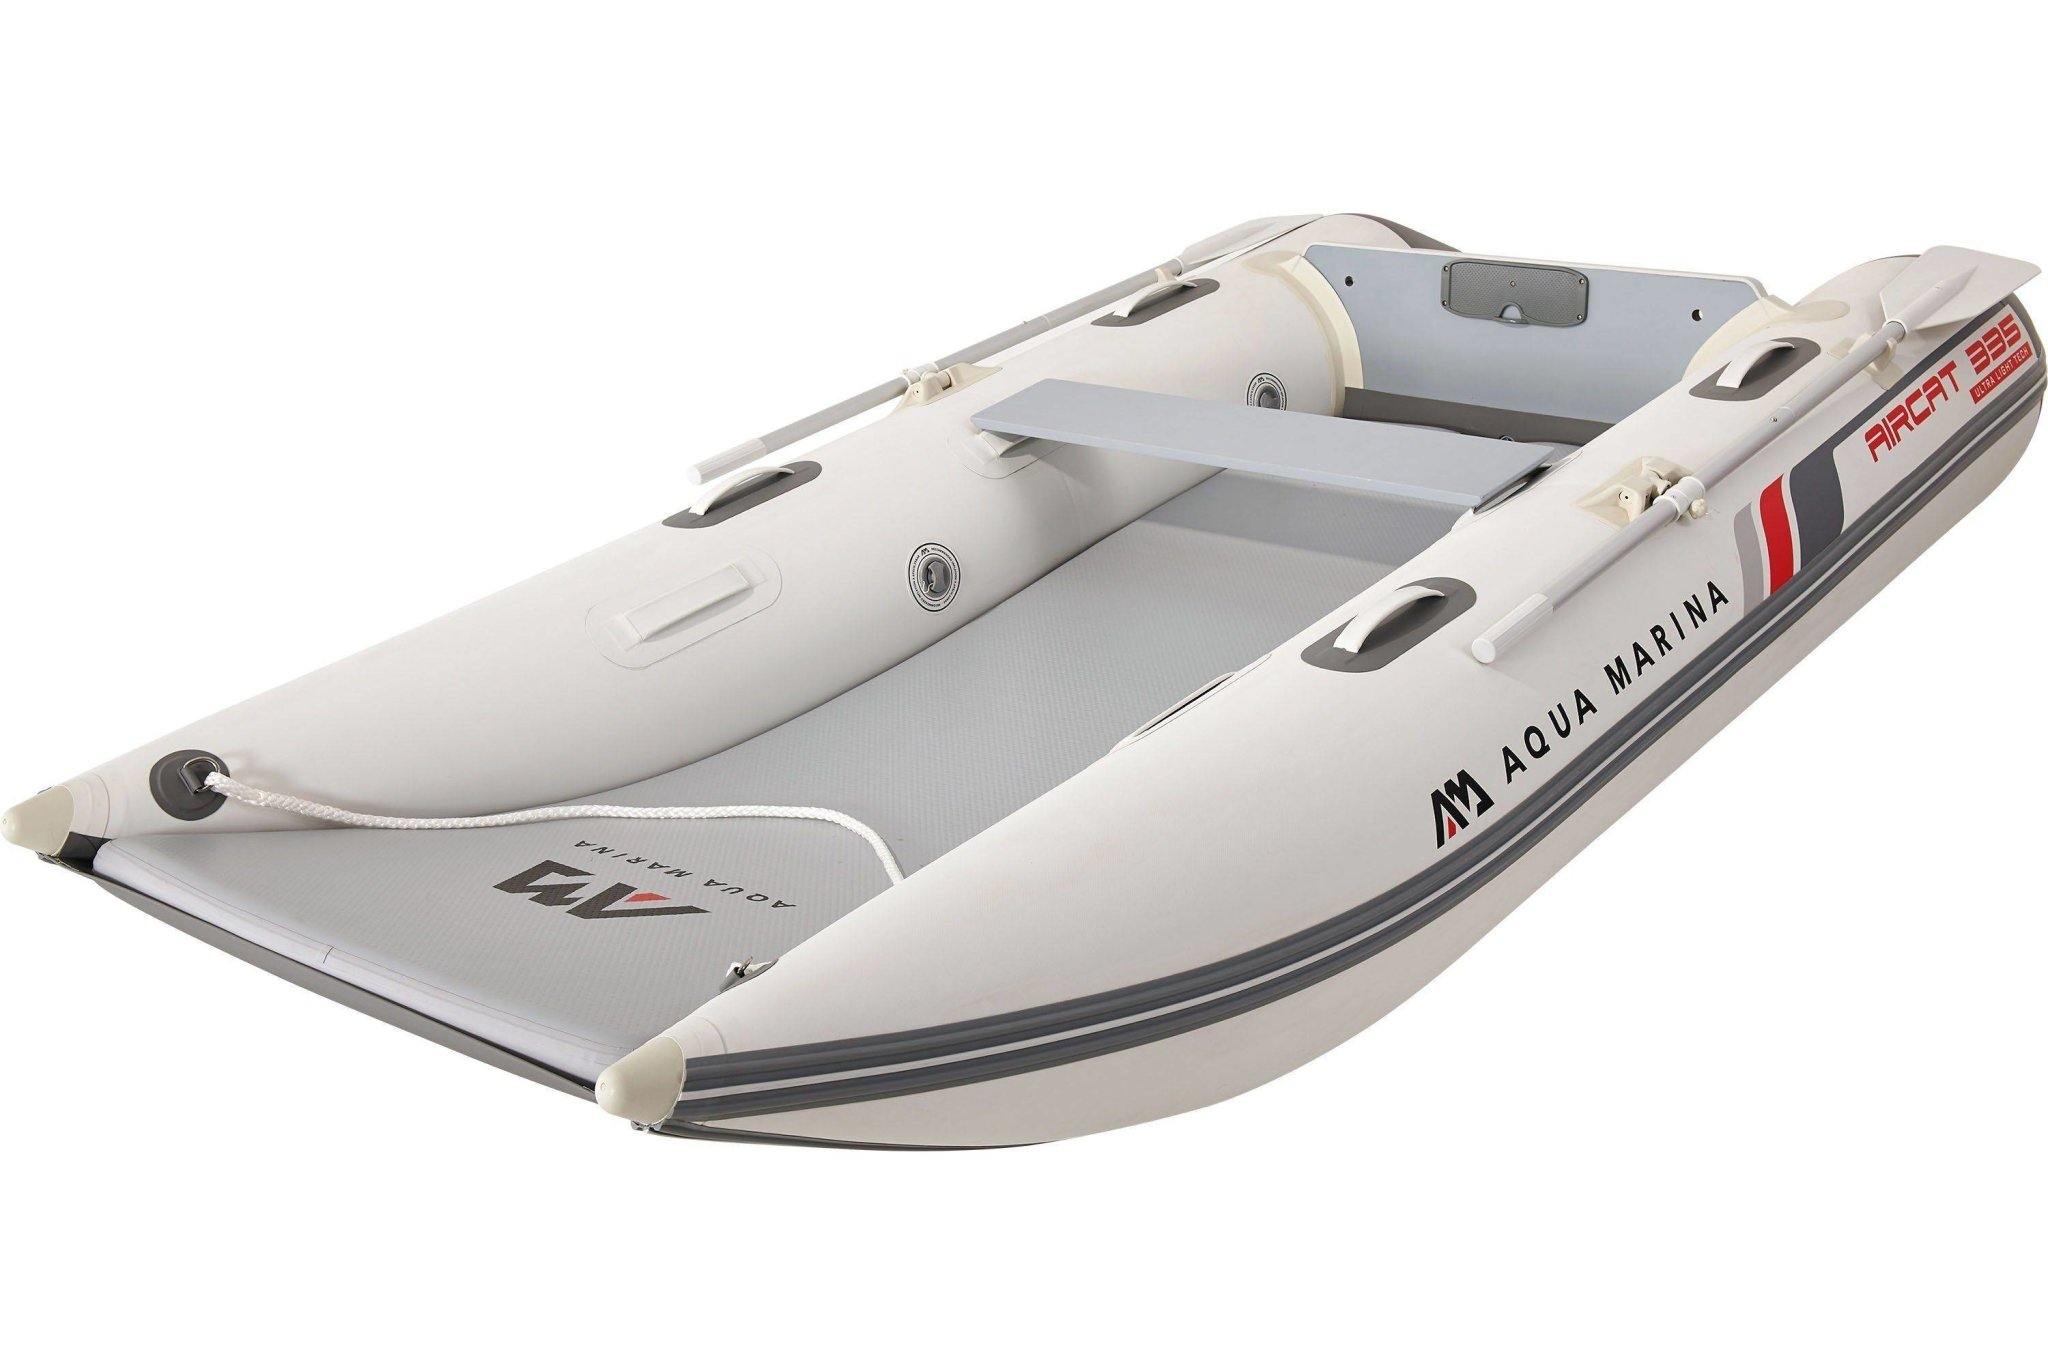 Aircat 11' Inflatable Catamaran with DWF Air Deck - Dti Direct USA